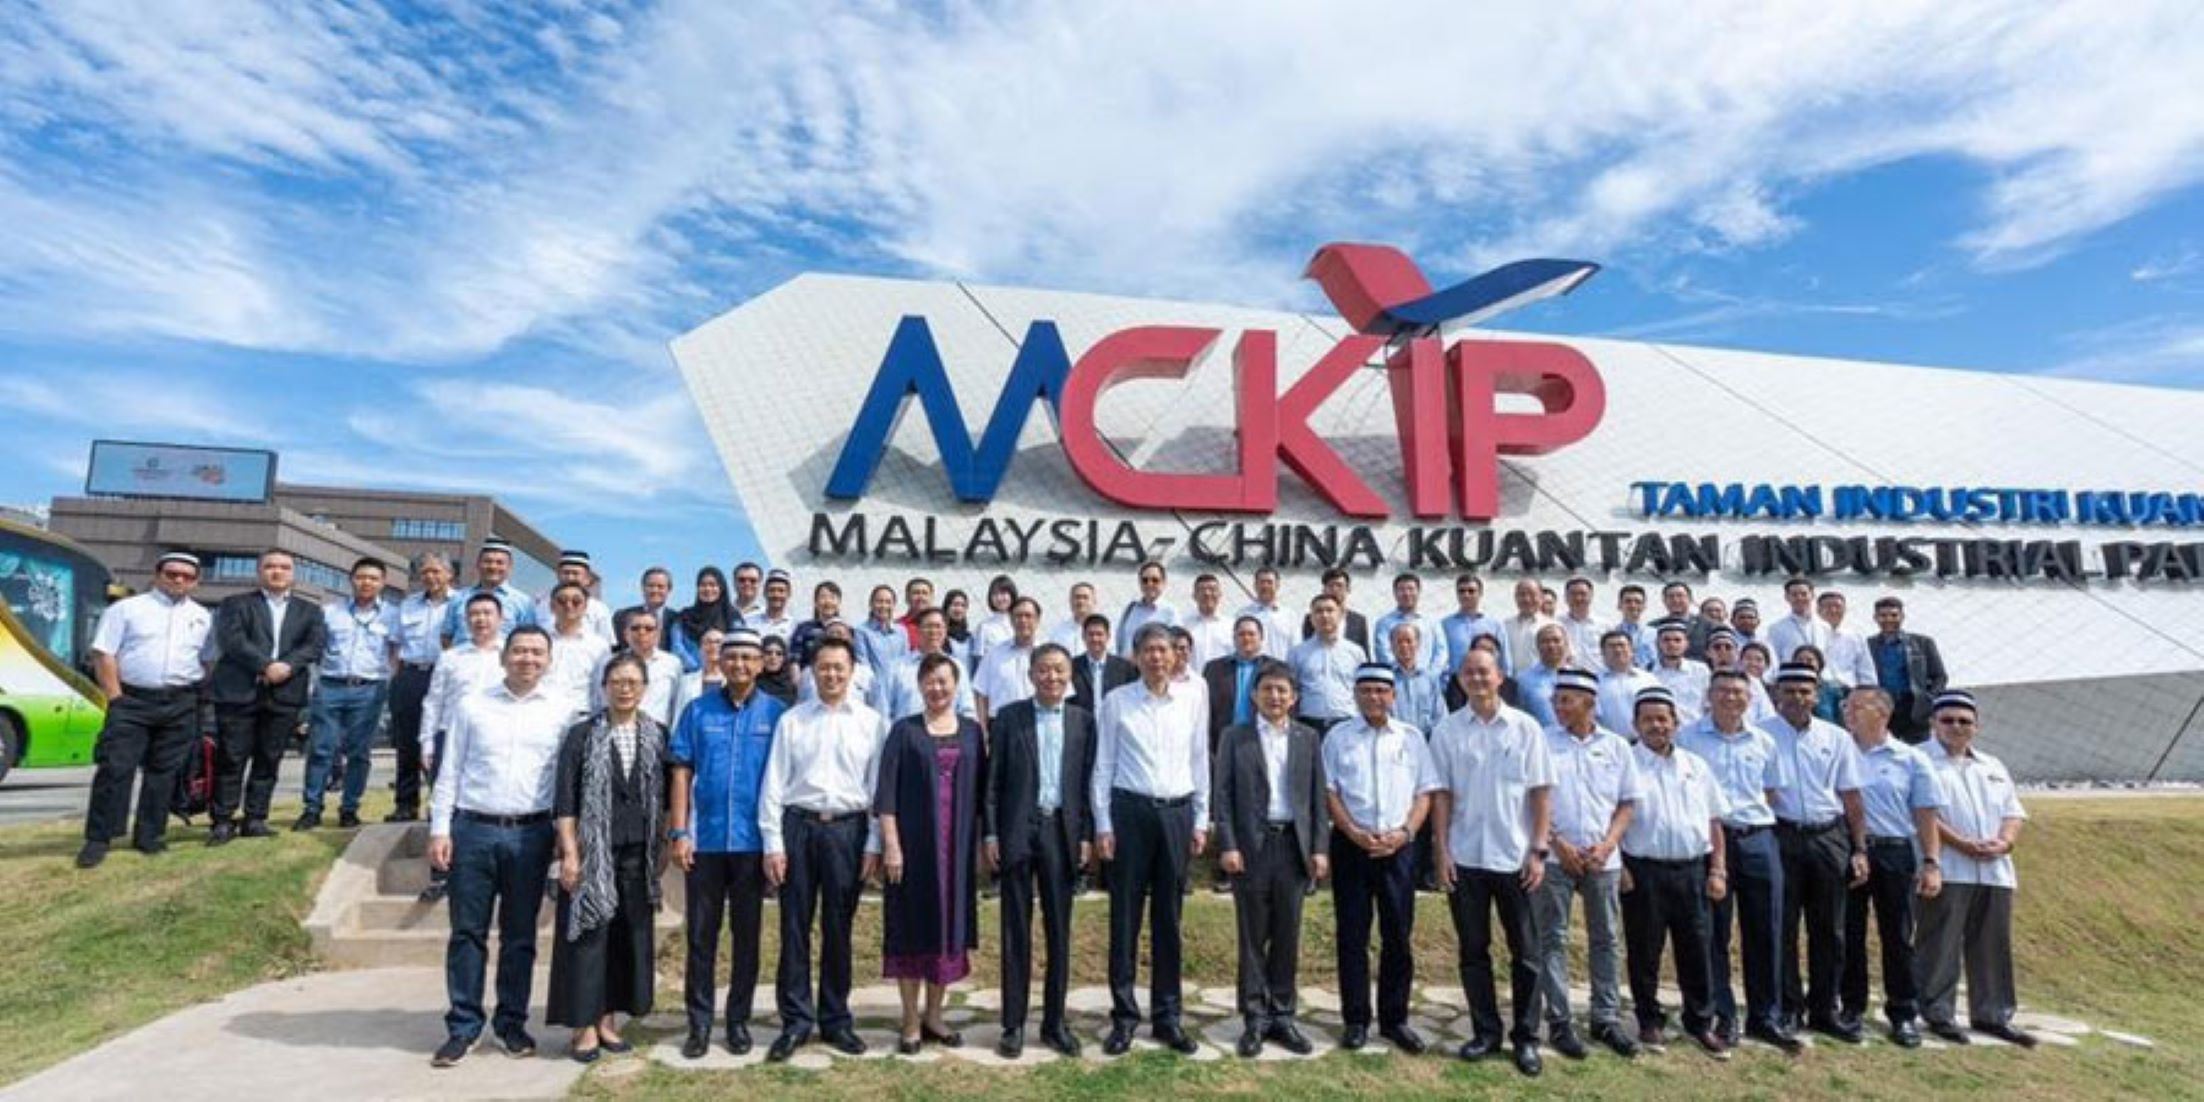 Malaysia-China Kuantan Industrial Park Marked 10th Anniversary